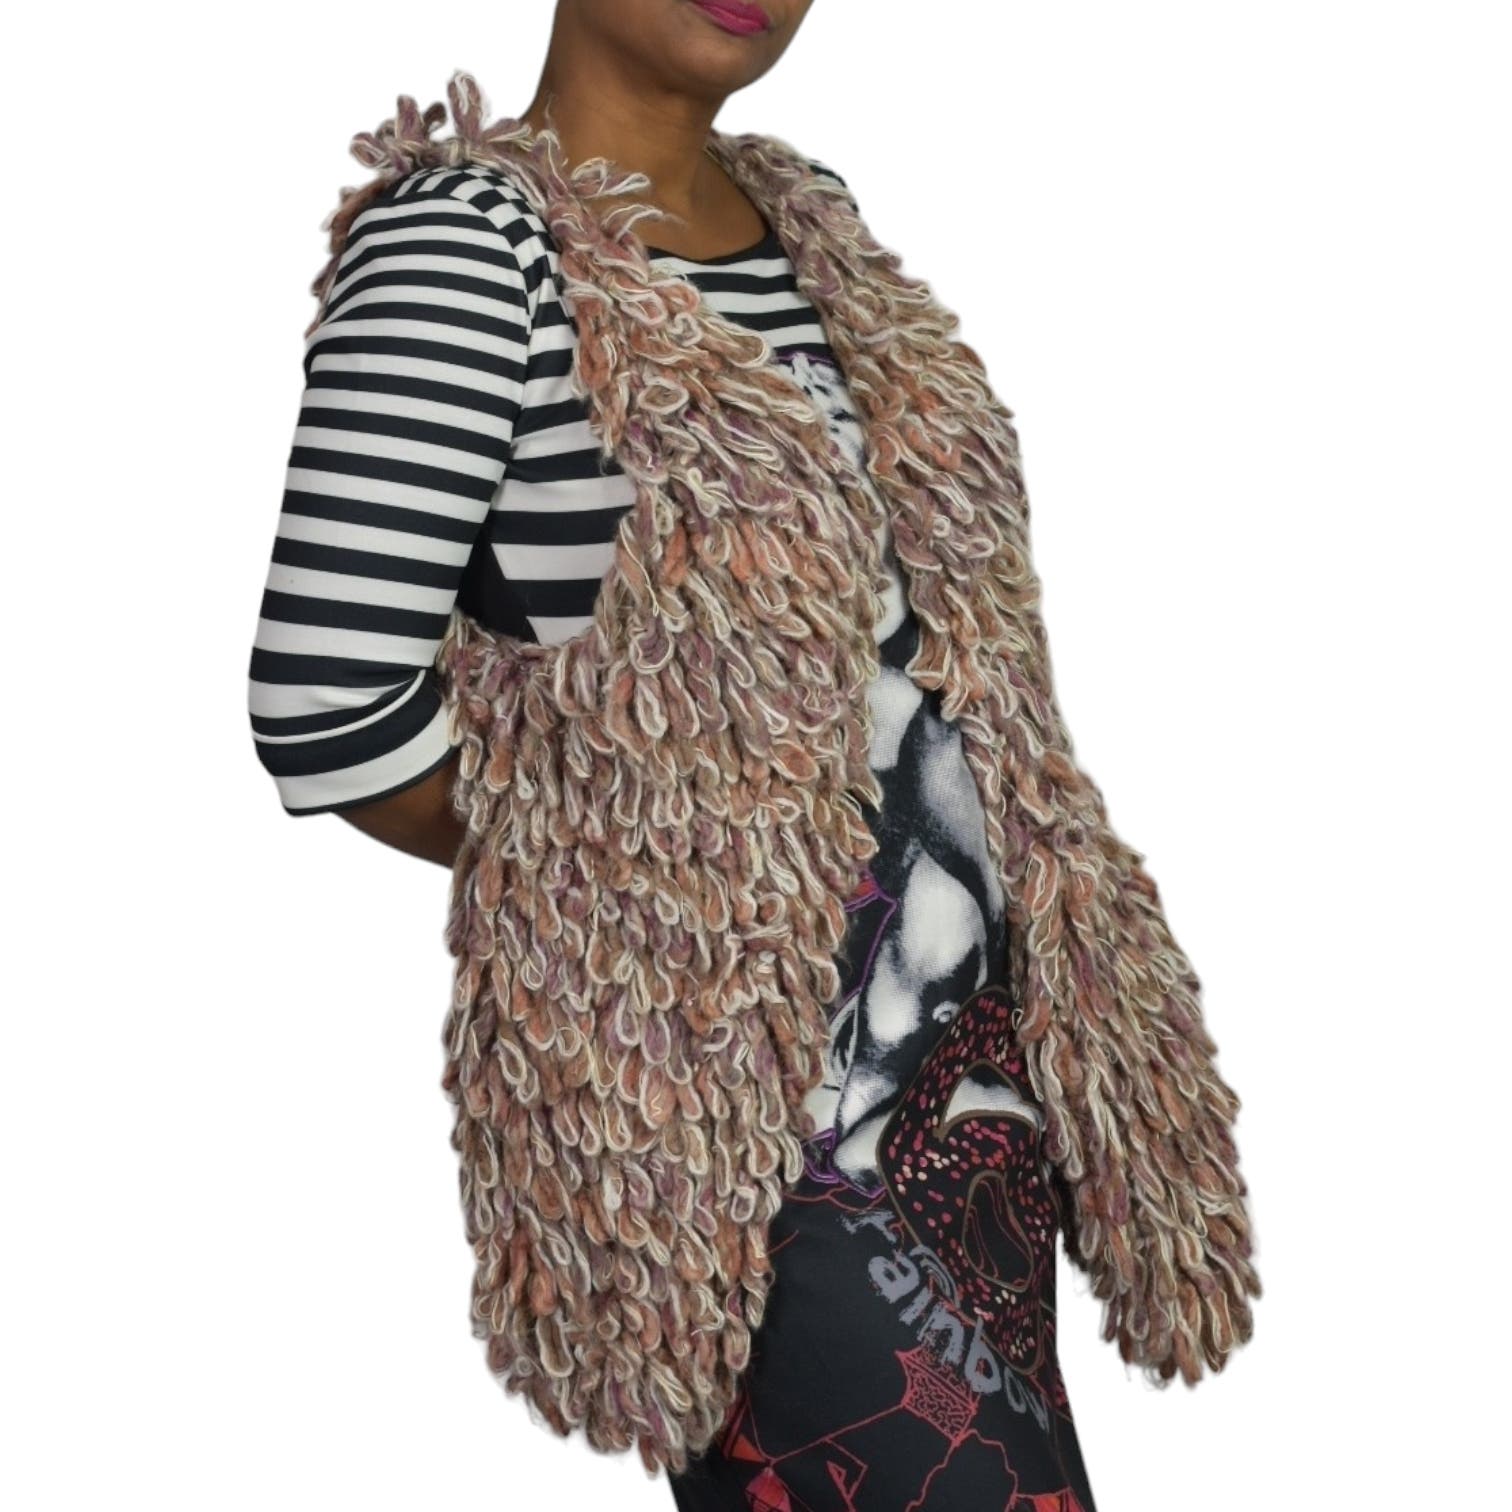 Anthropologie Hand Knit by Dollie Vest Tan Sherbet Loop Yarn Alpaca Textile Fiber Chunky Shaggy Wearable Art Size Medium Large